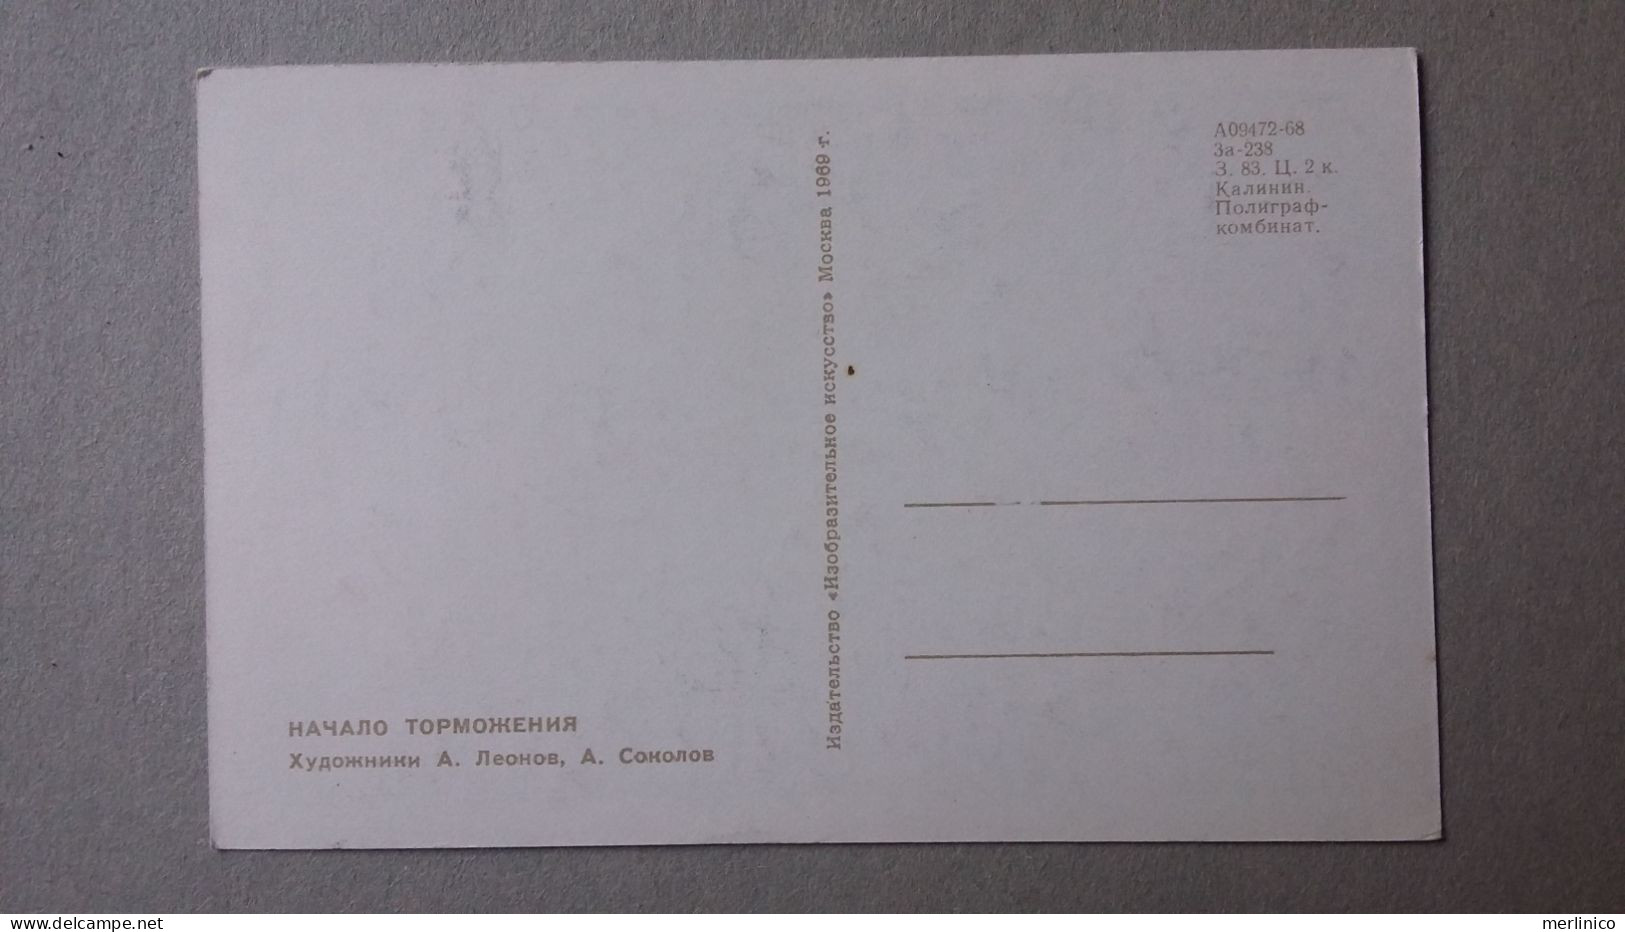 Space, Soviet Union, vintage 1969, 11 postcards